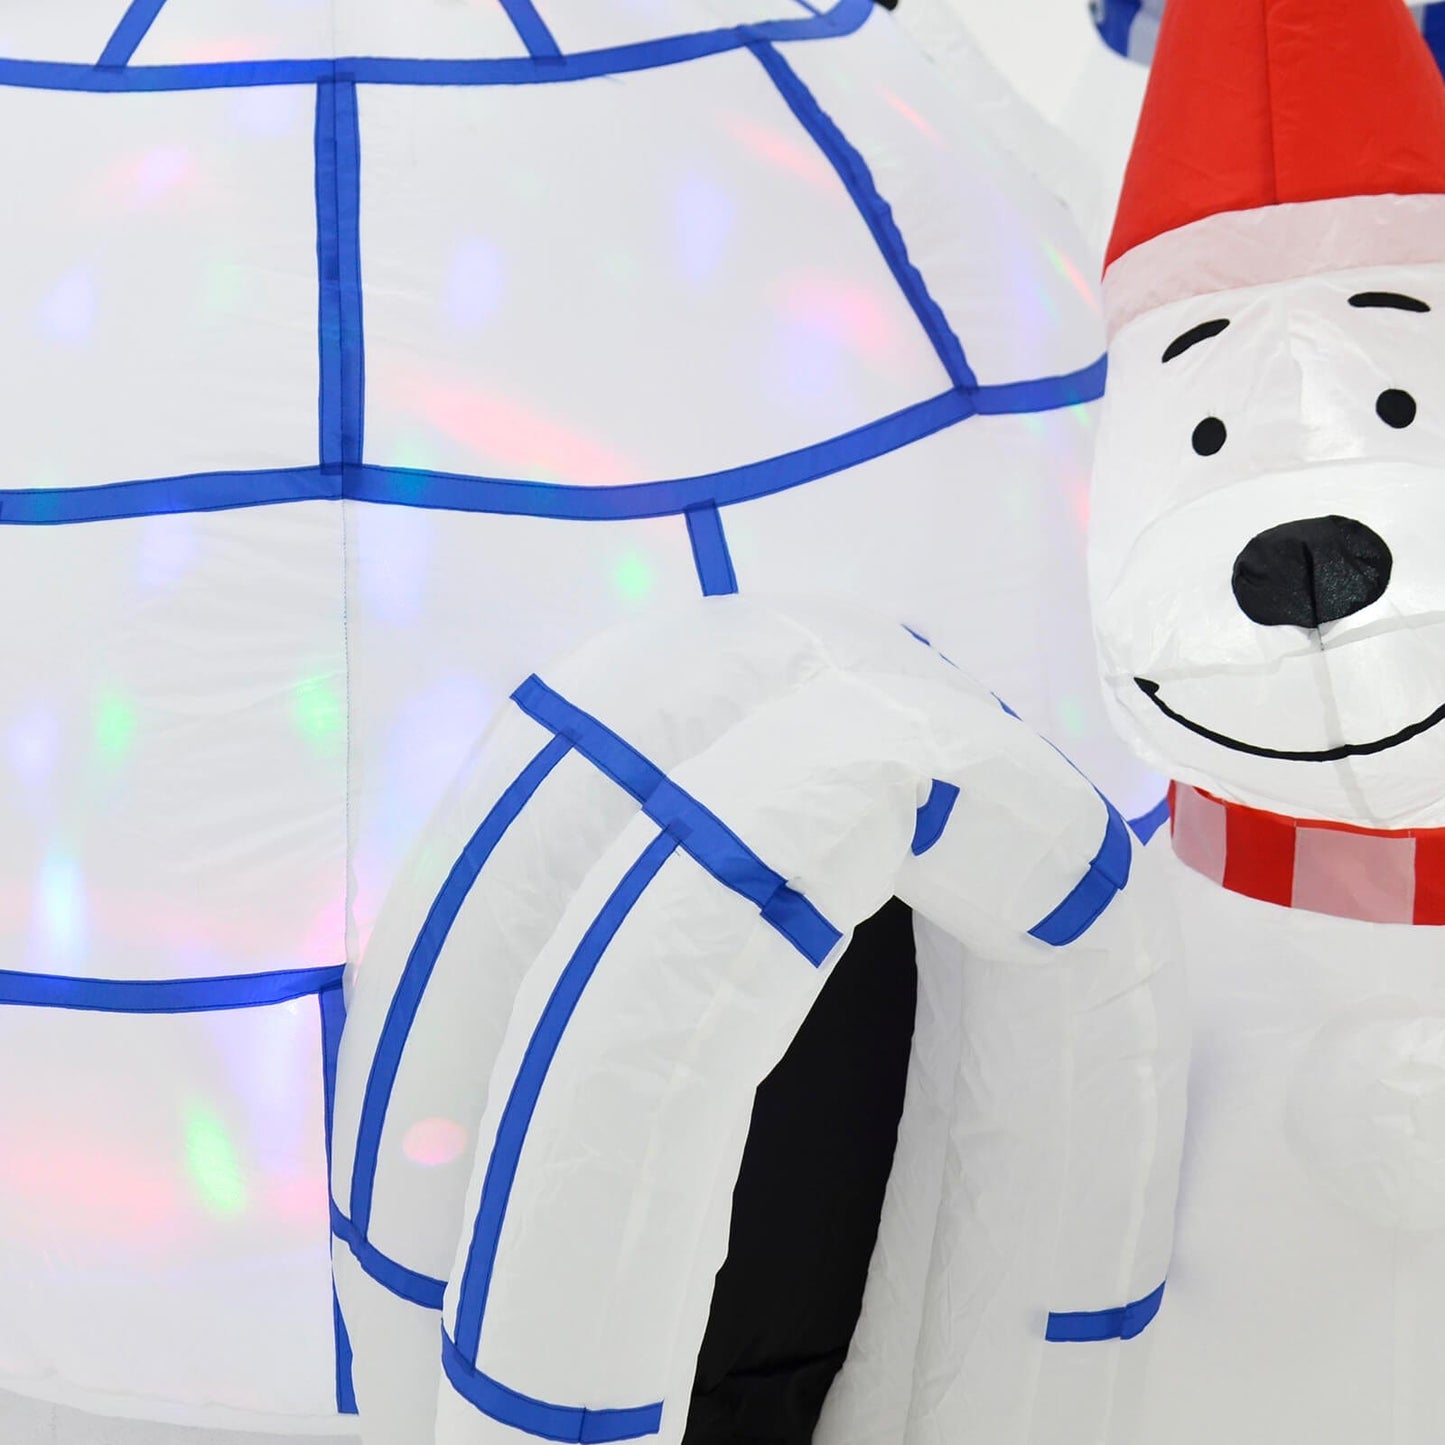 Mr Crimbo 6ft Inflatable Igloo LED Lights Polar Bears Decoration